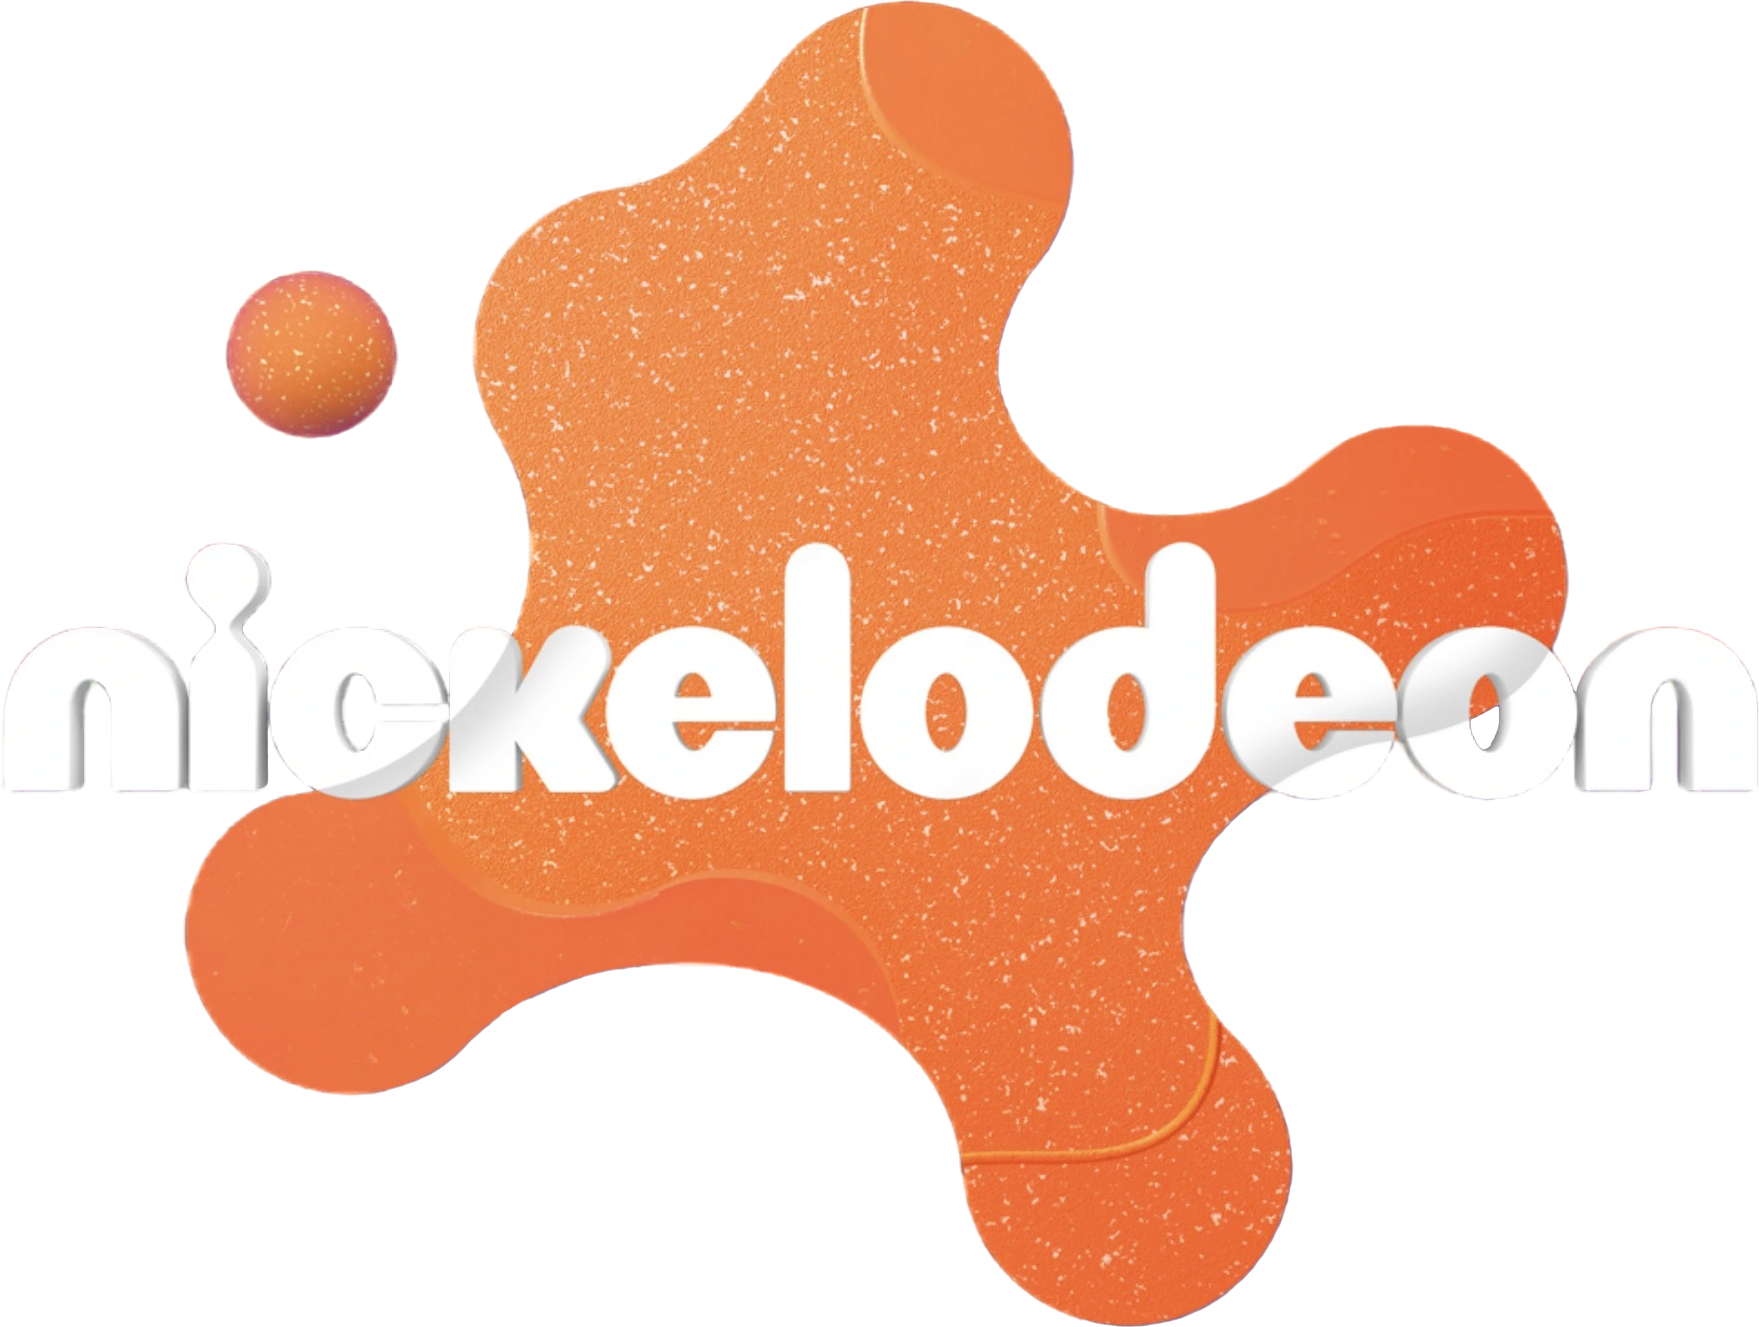 NickALive!: Nickelodeon Australia And New Zealand To Premiere